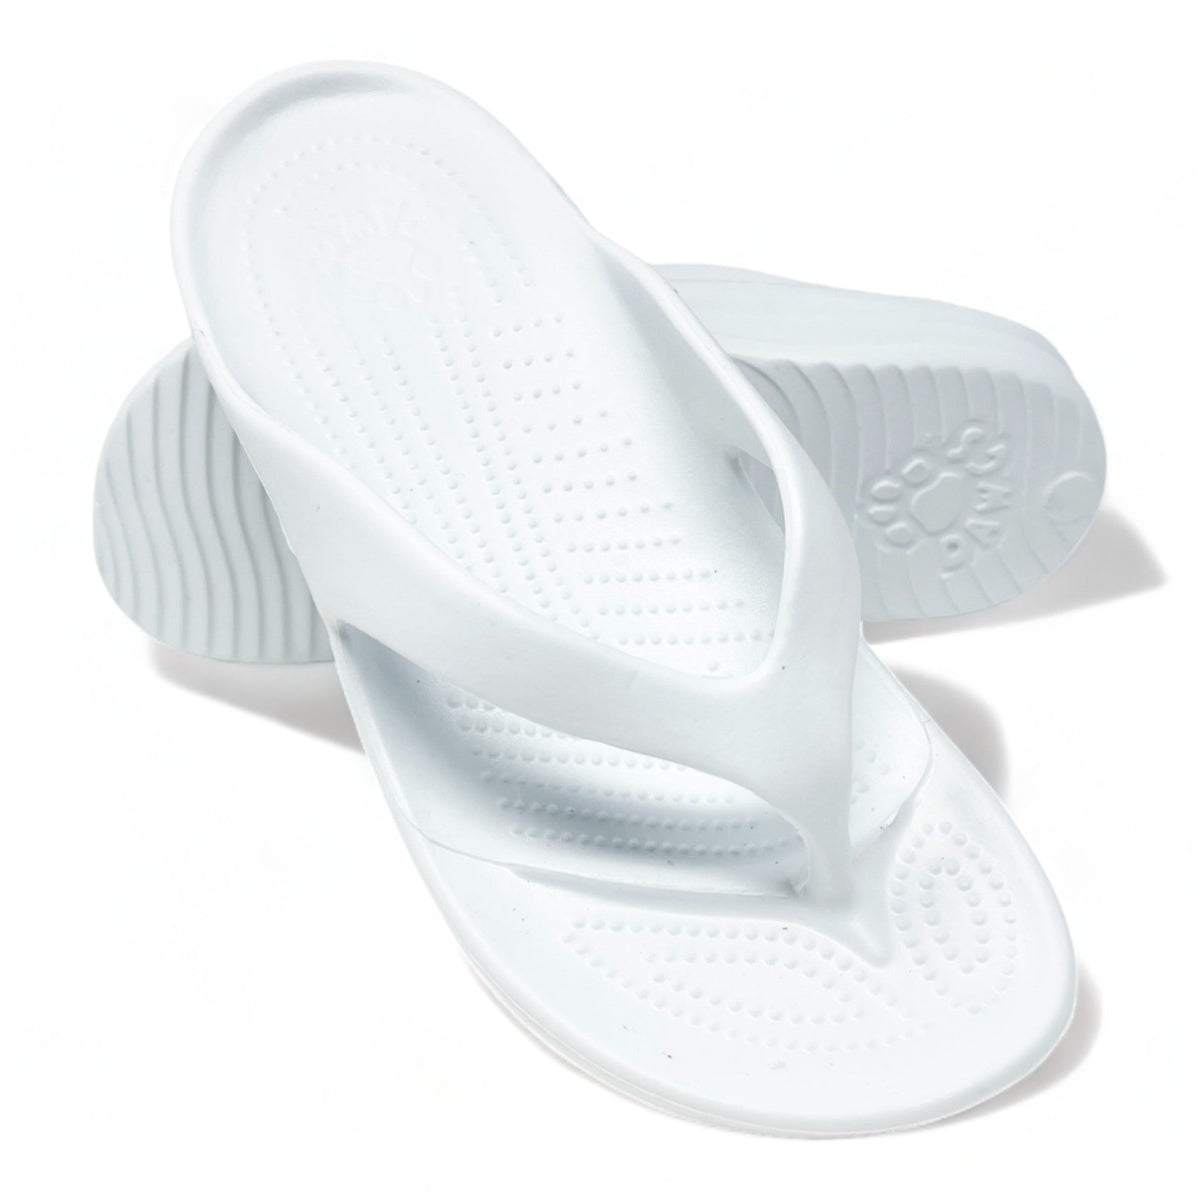 Women&#39;s Flip Flops - White by DAWGS USA